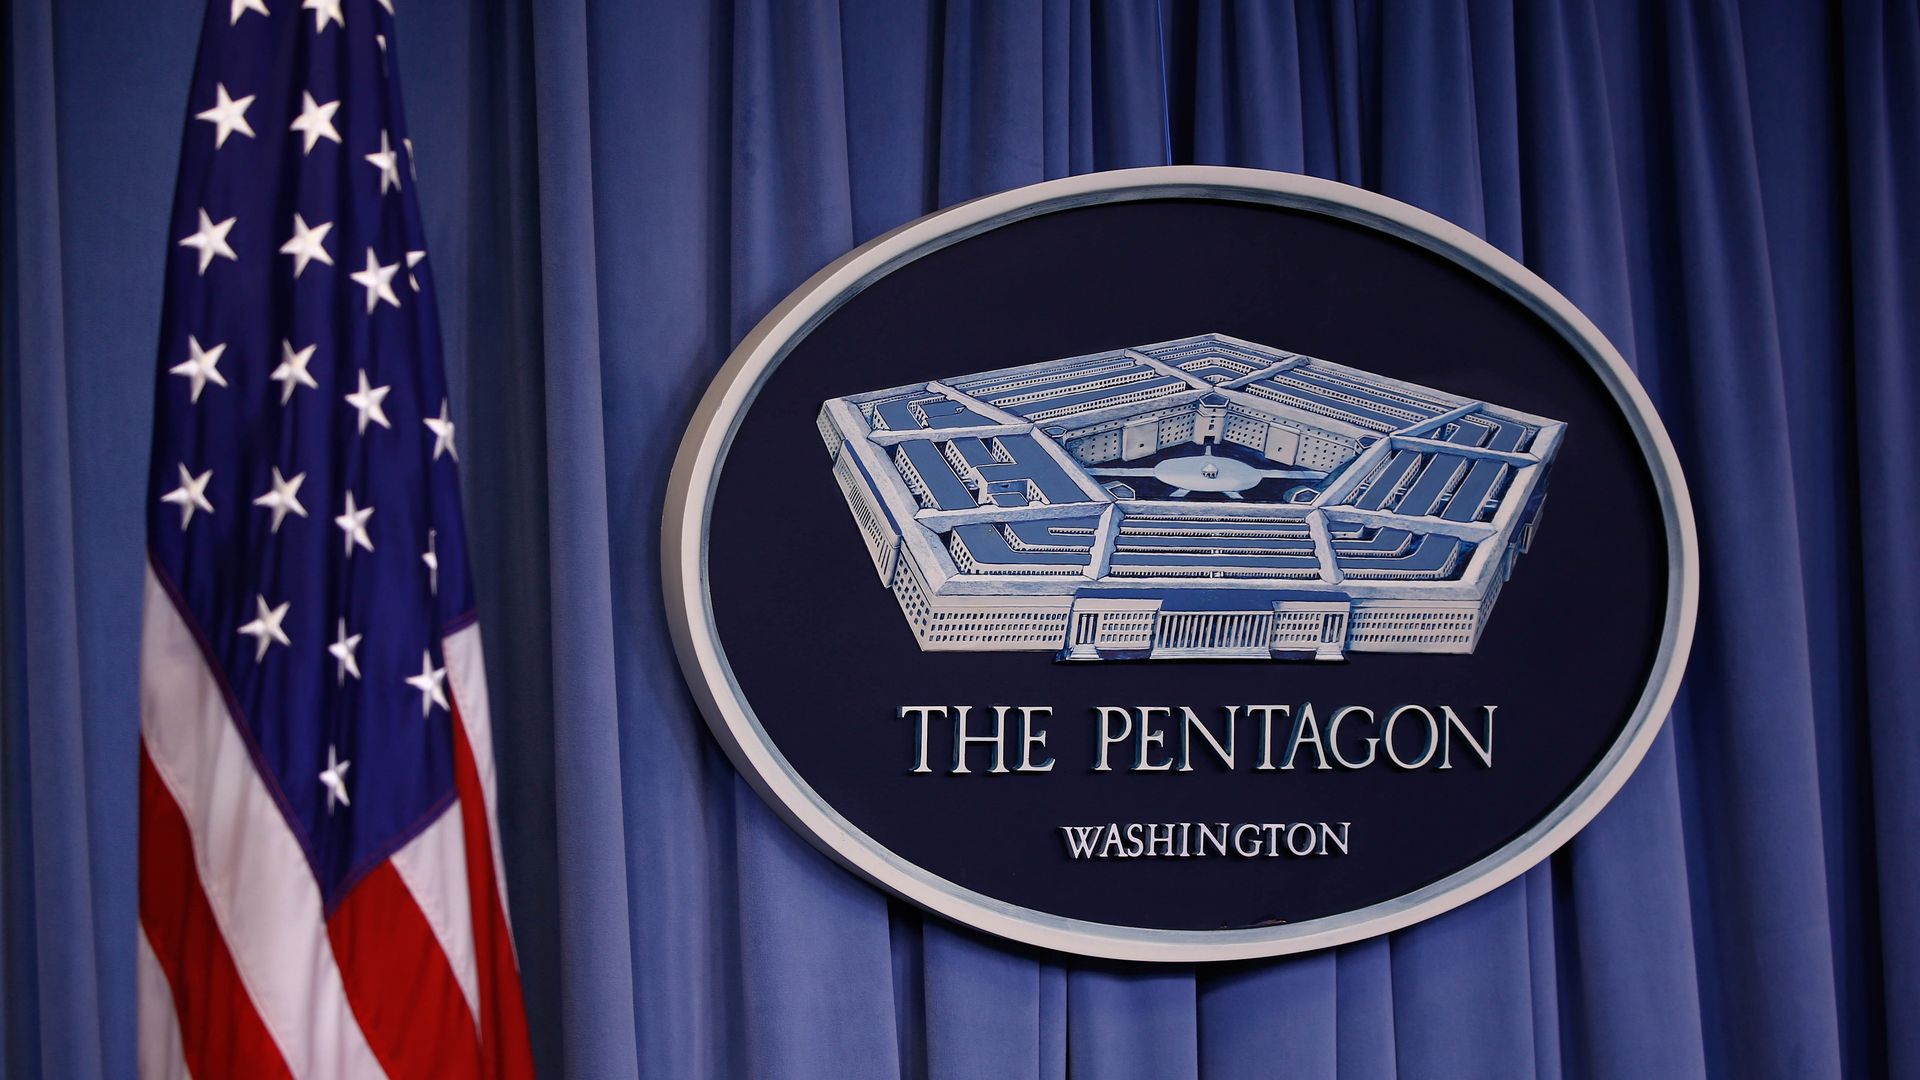 The pentagon logo